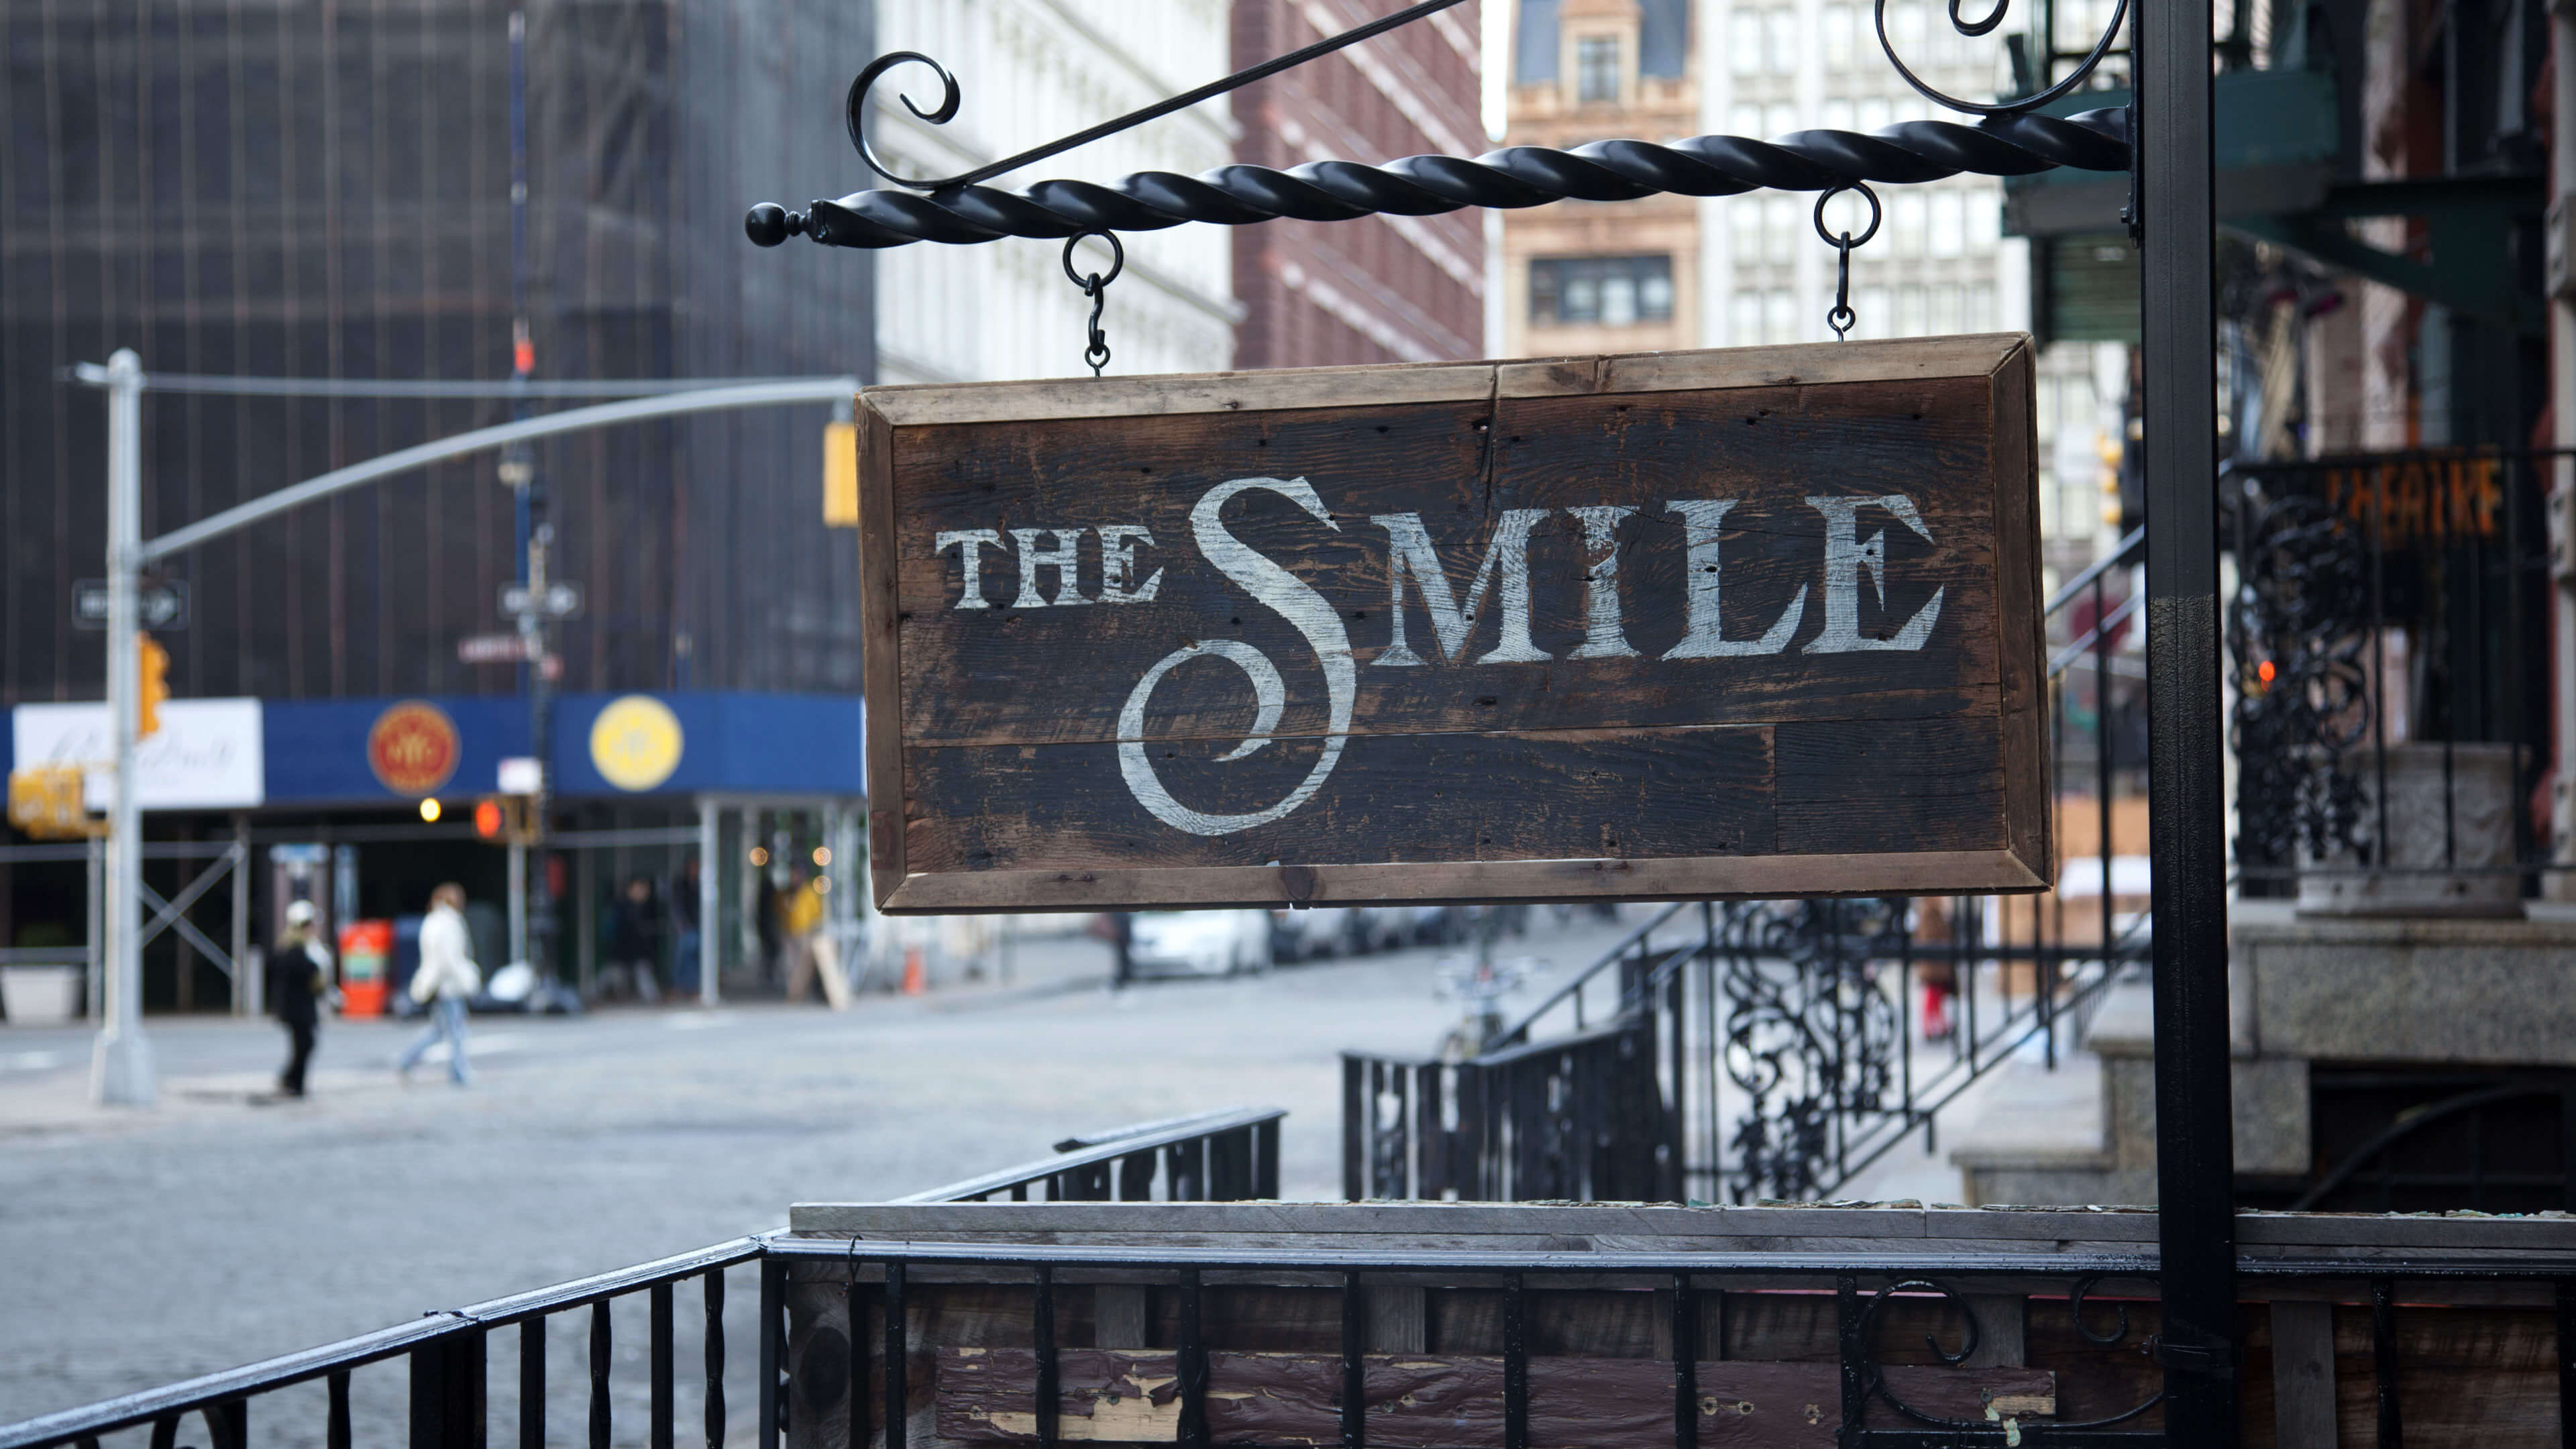 The Smile: A Cozy Café